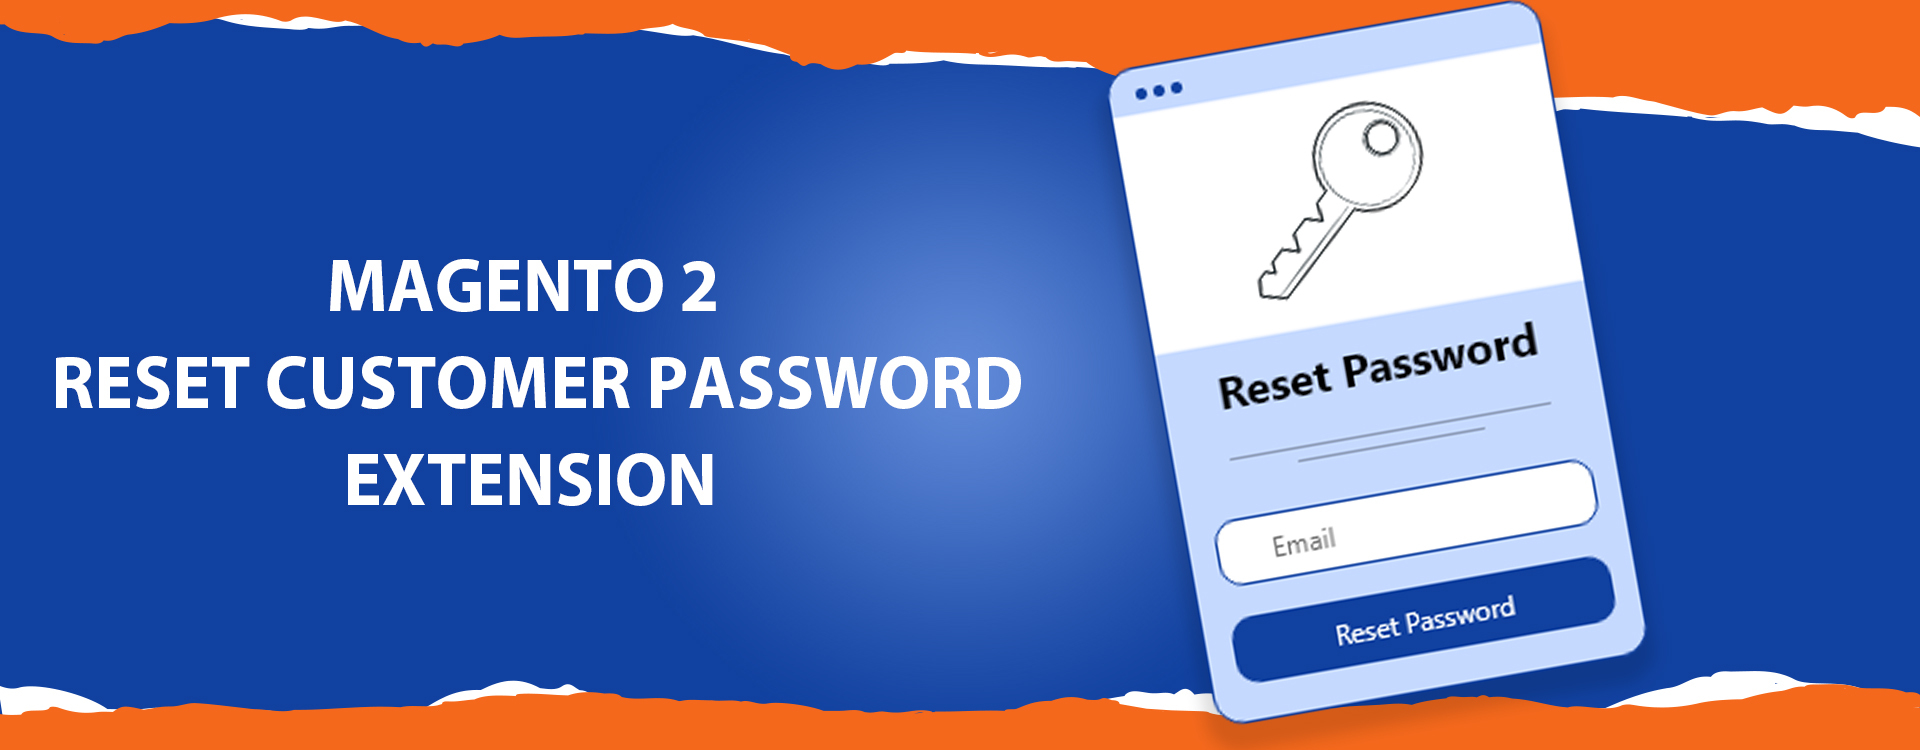 Magento 2 Reset Customer Password Extension